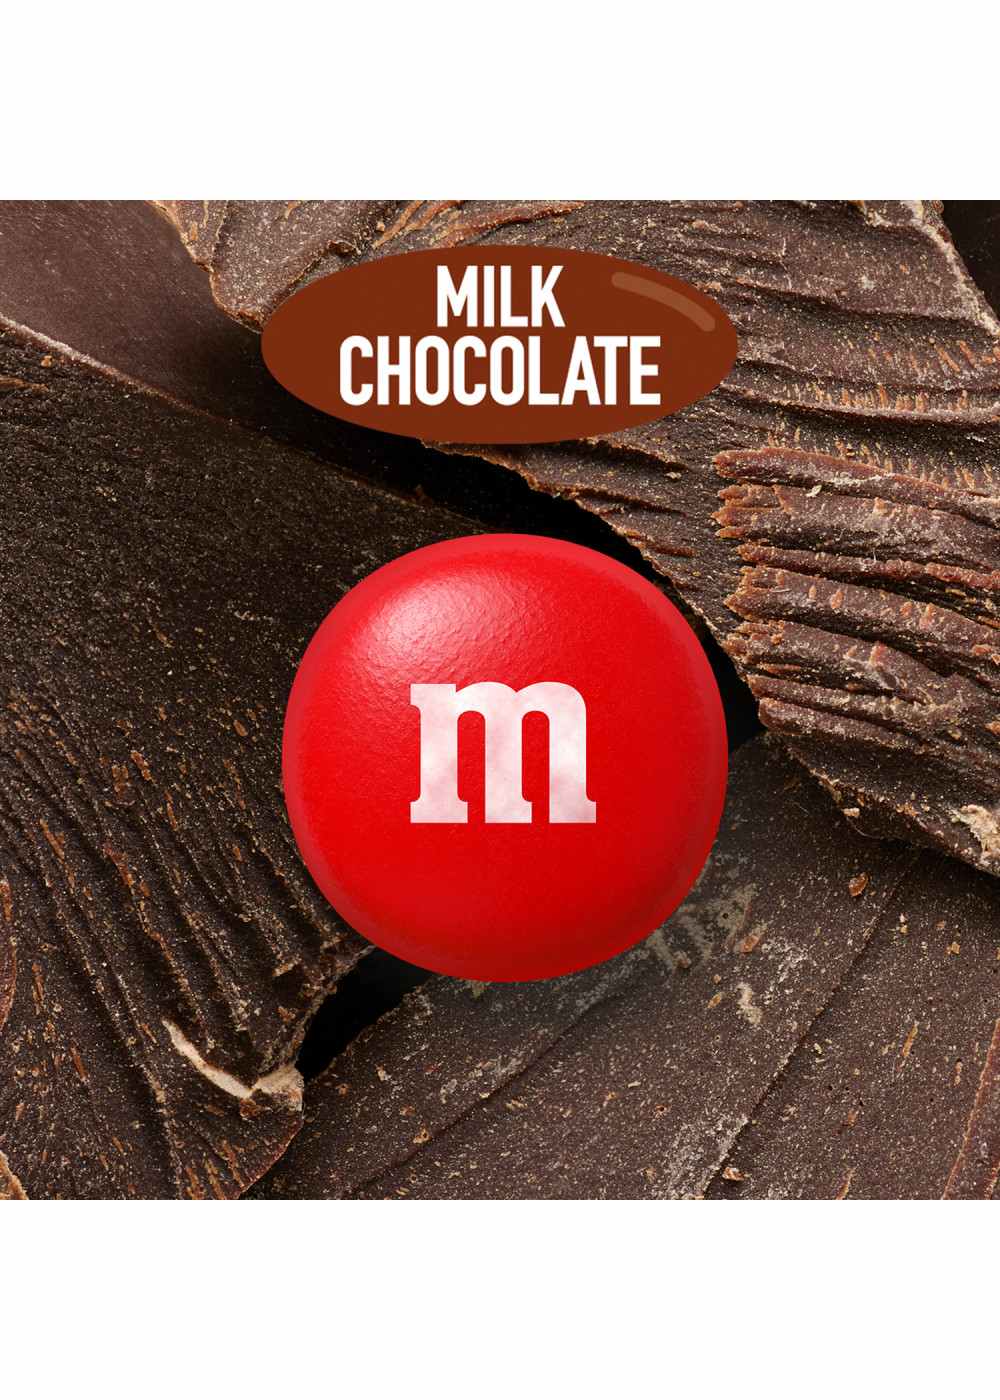 M&M's Chocolate Candies, Peanut, Party Size 38 Oz